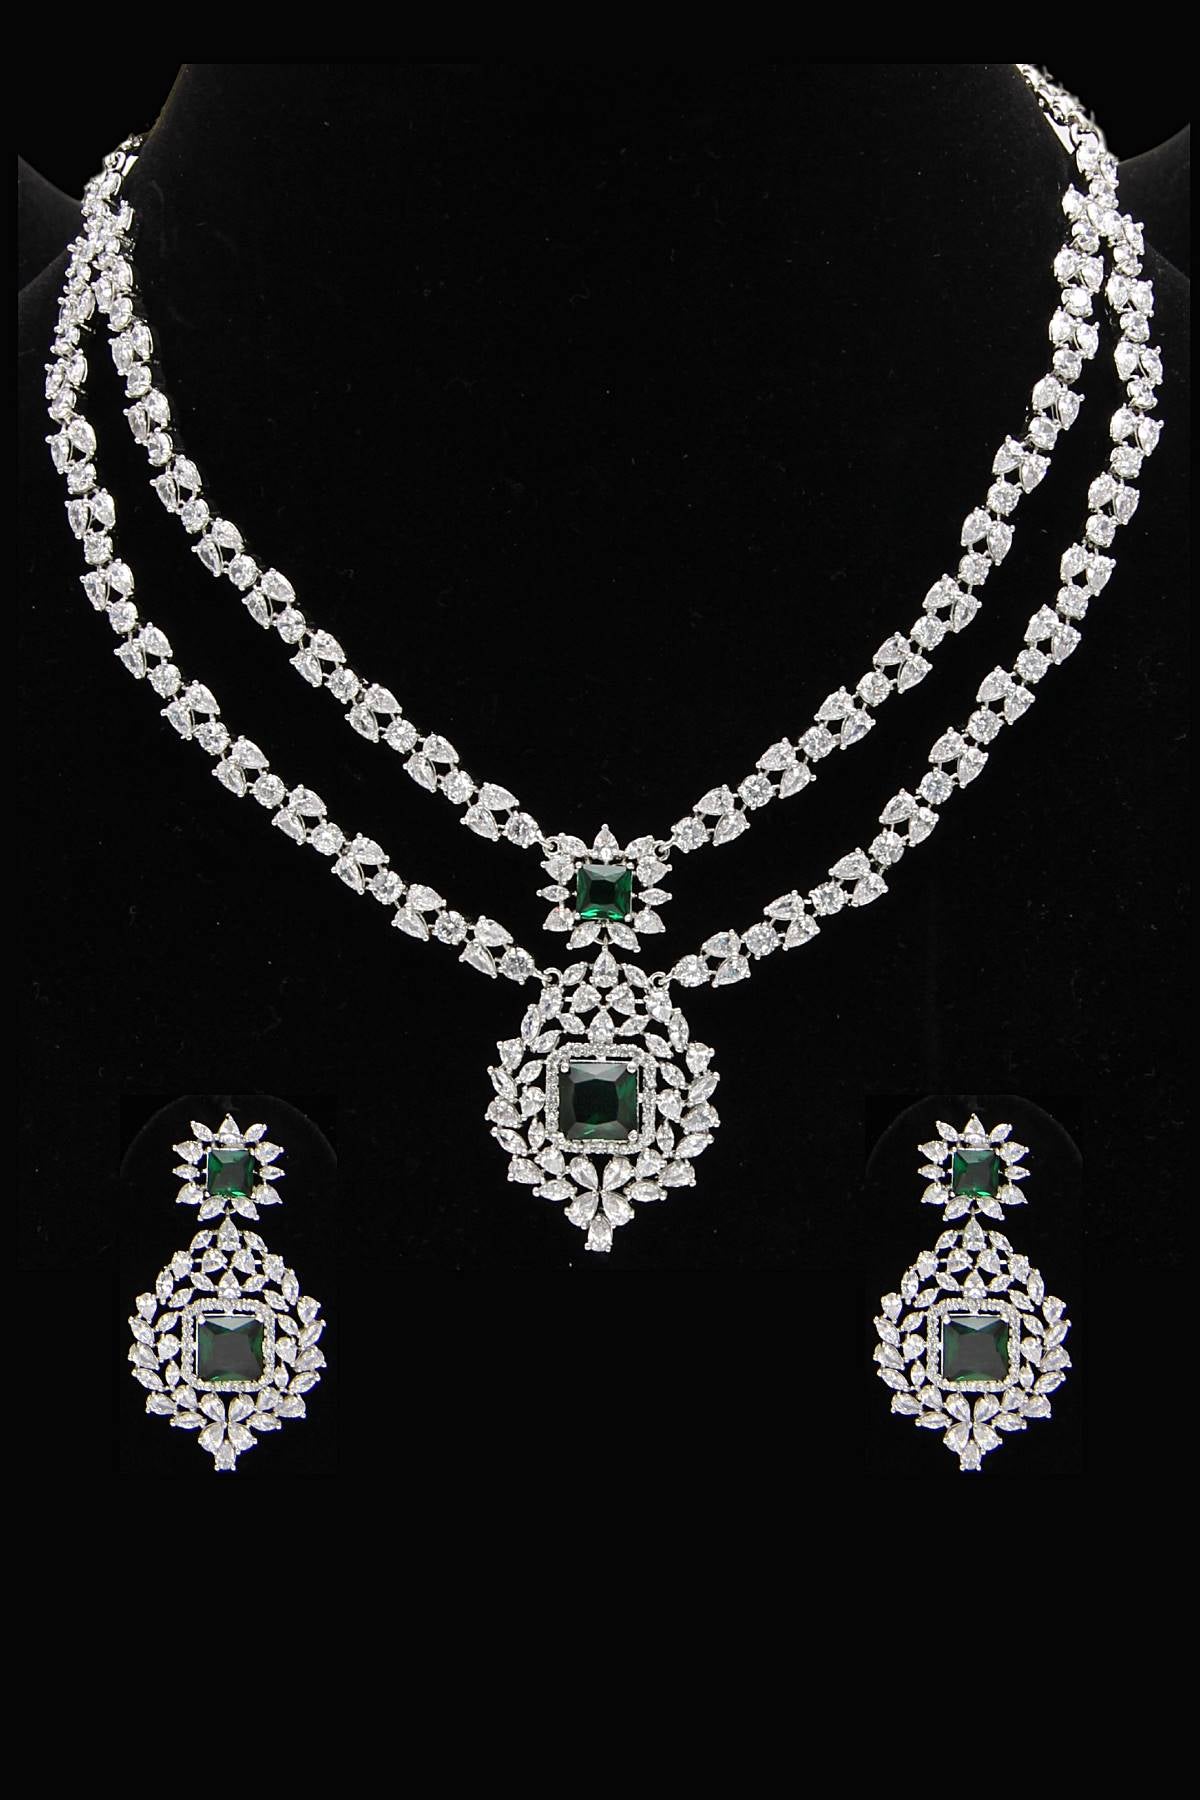 Layered American Diamonds Green Swarovski Cocktail Necklace Jewelry Set